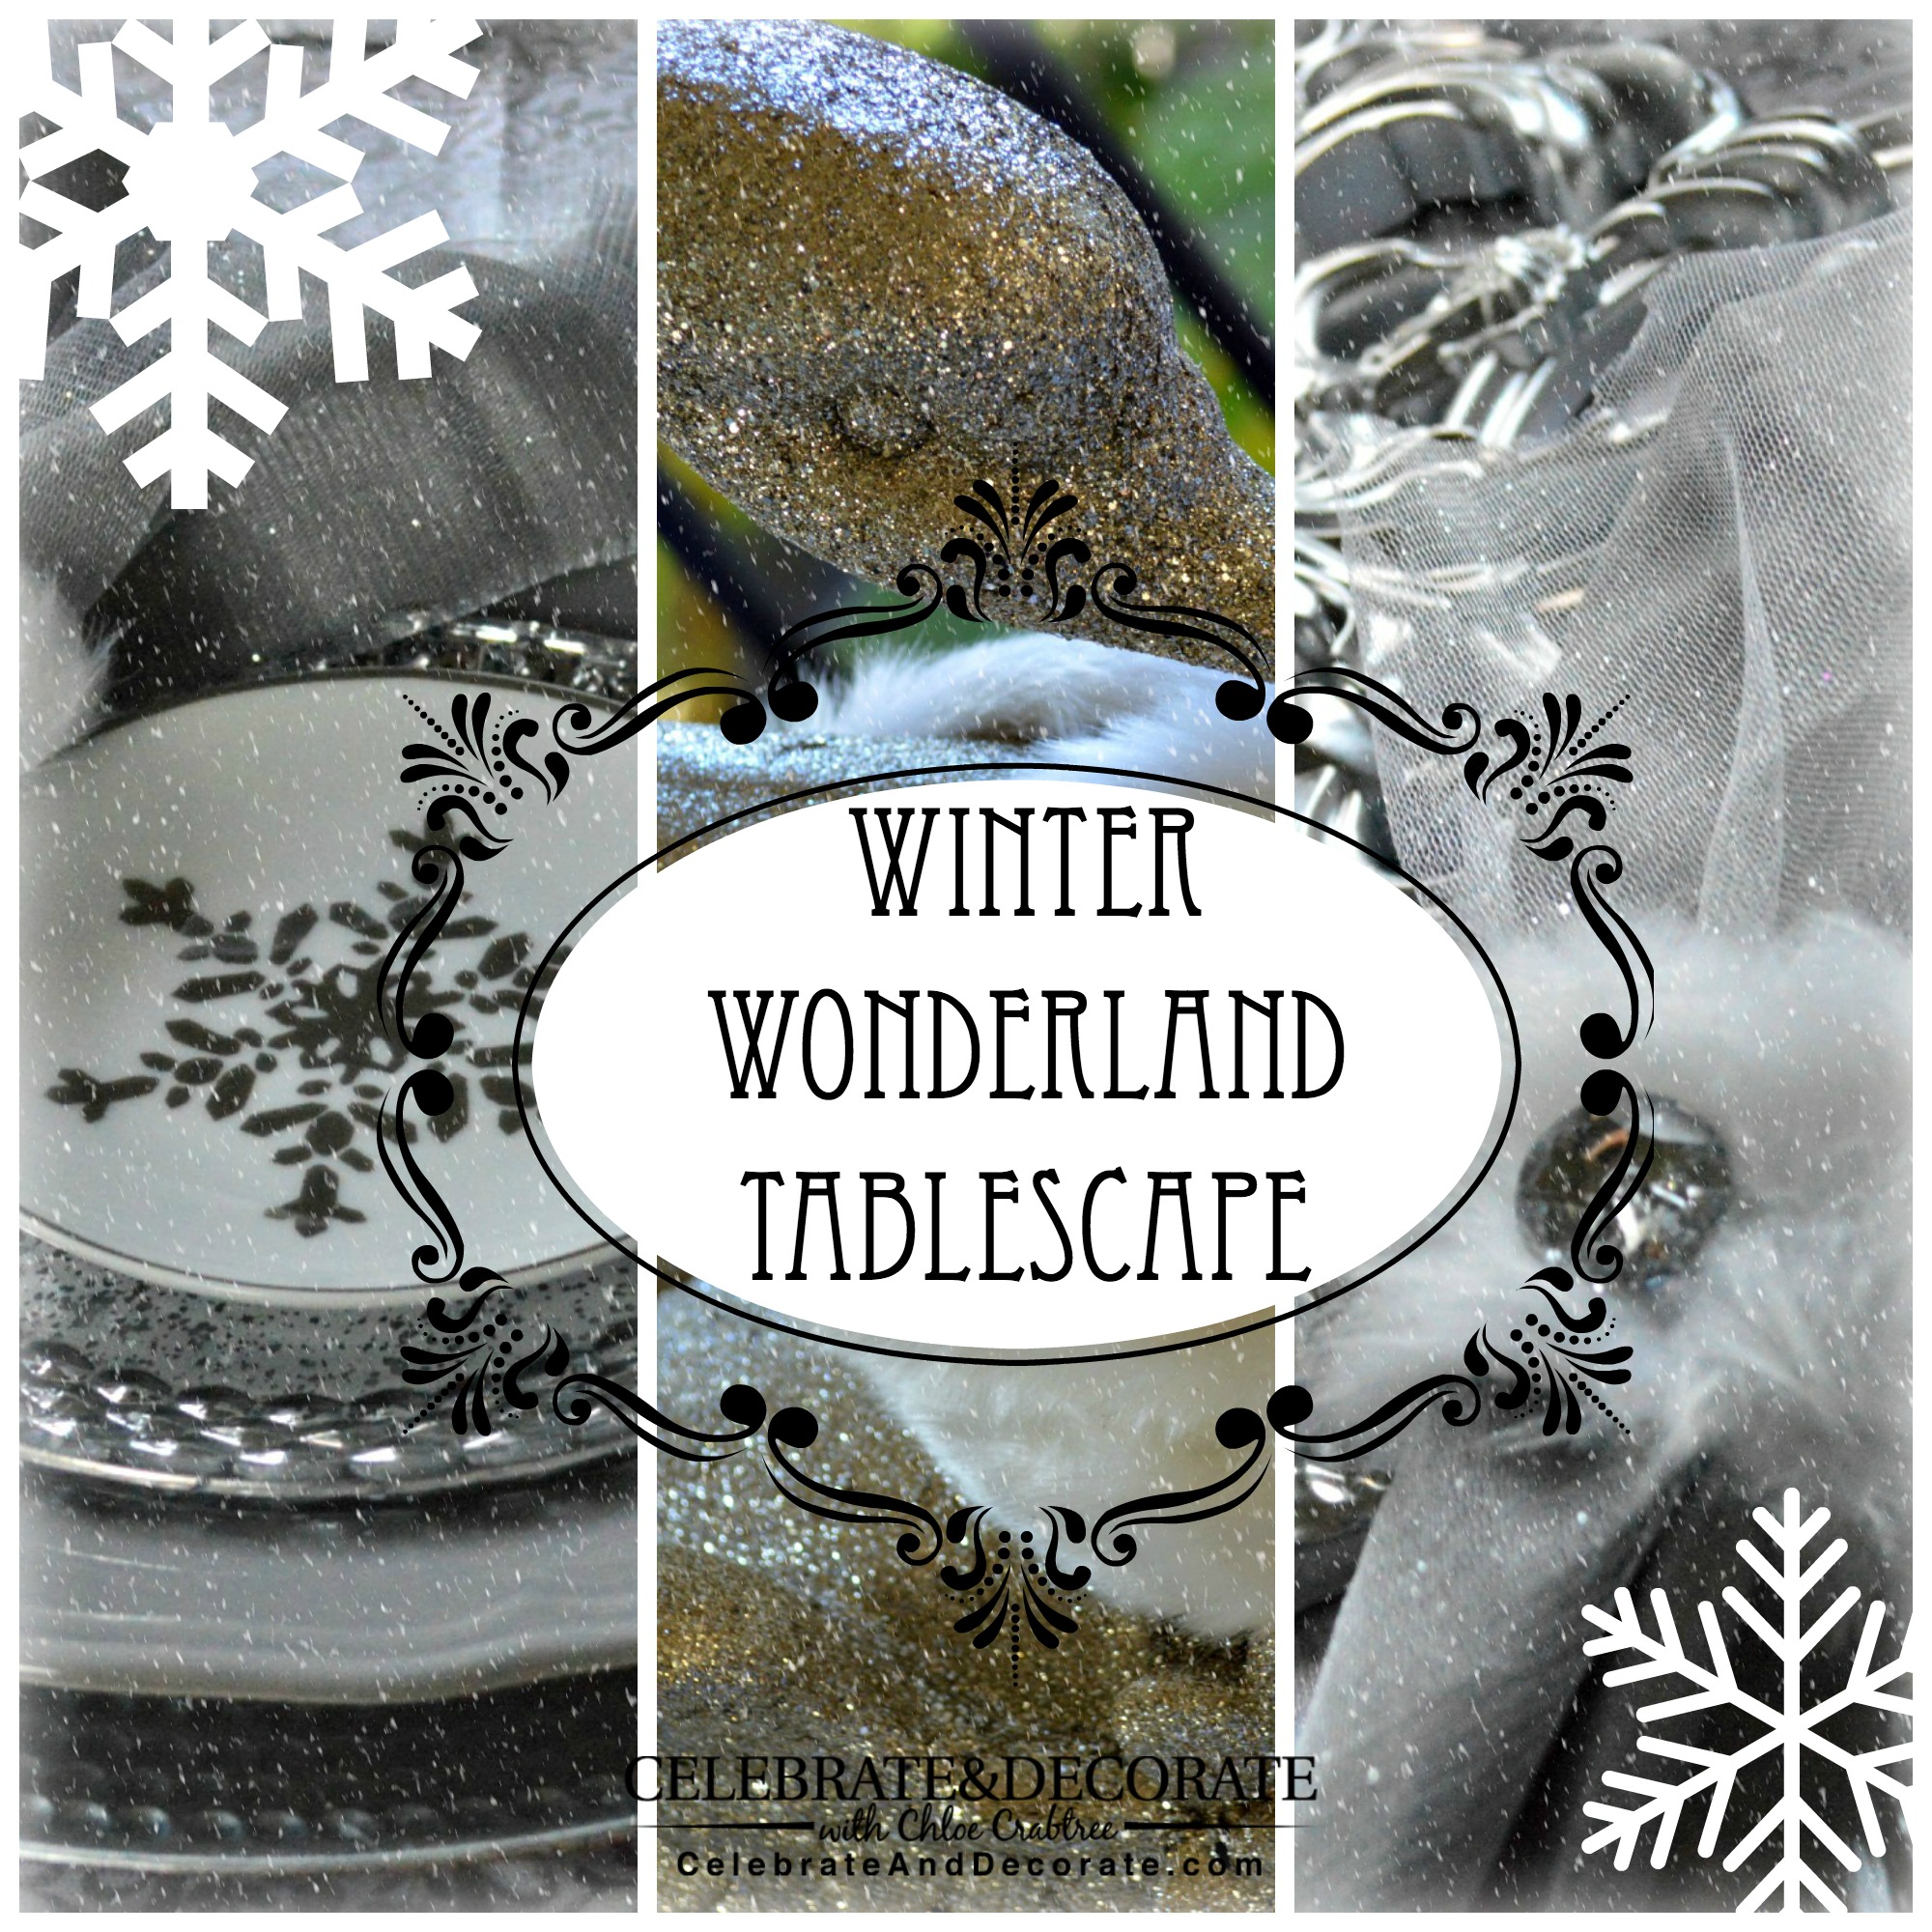 A Winter Wonderland Tablescape